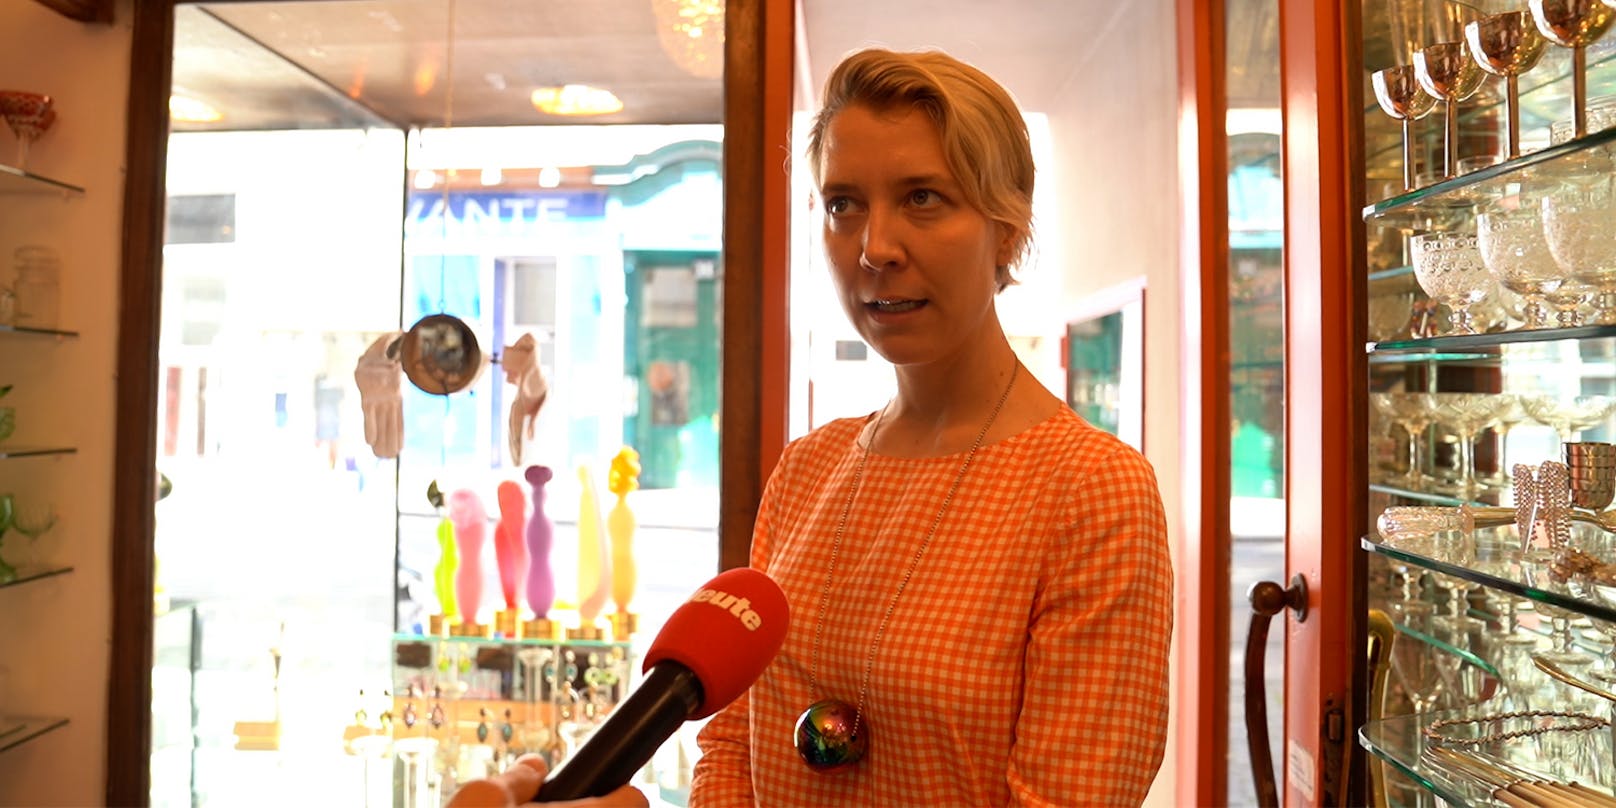 Kunsthistorikerin Katharina Husslein im <em>"Heute"</em>-Talk.